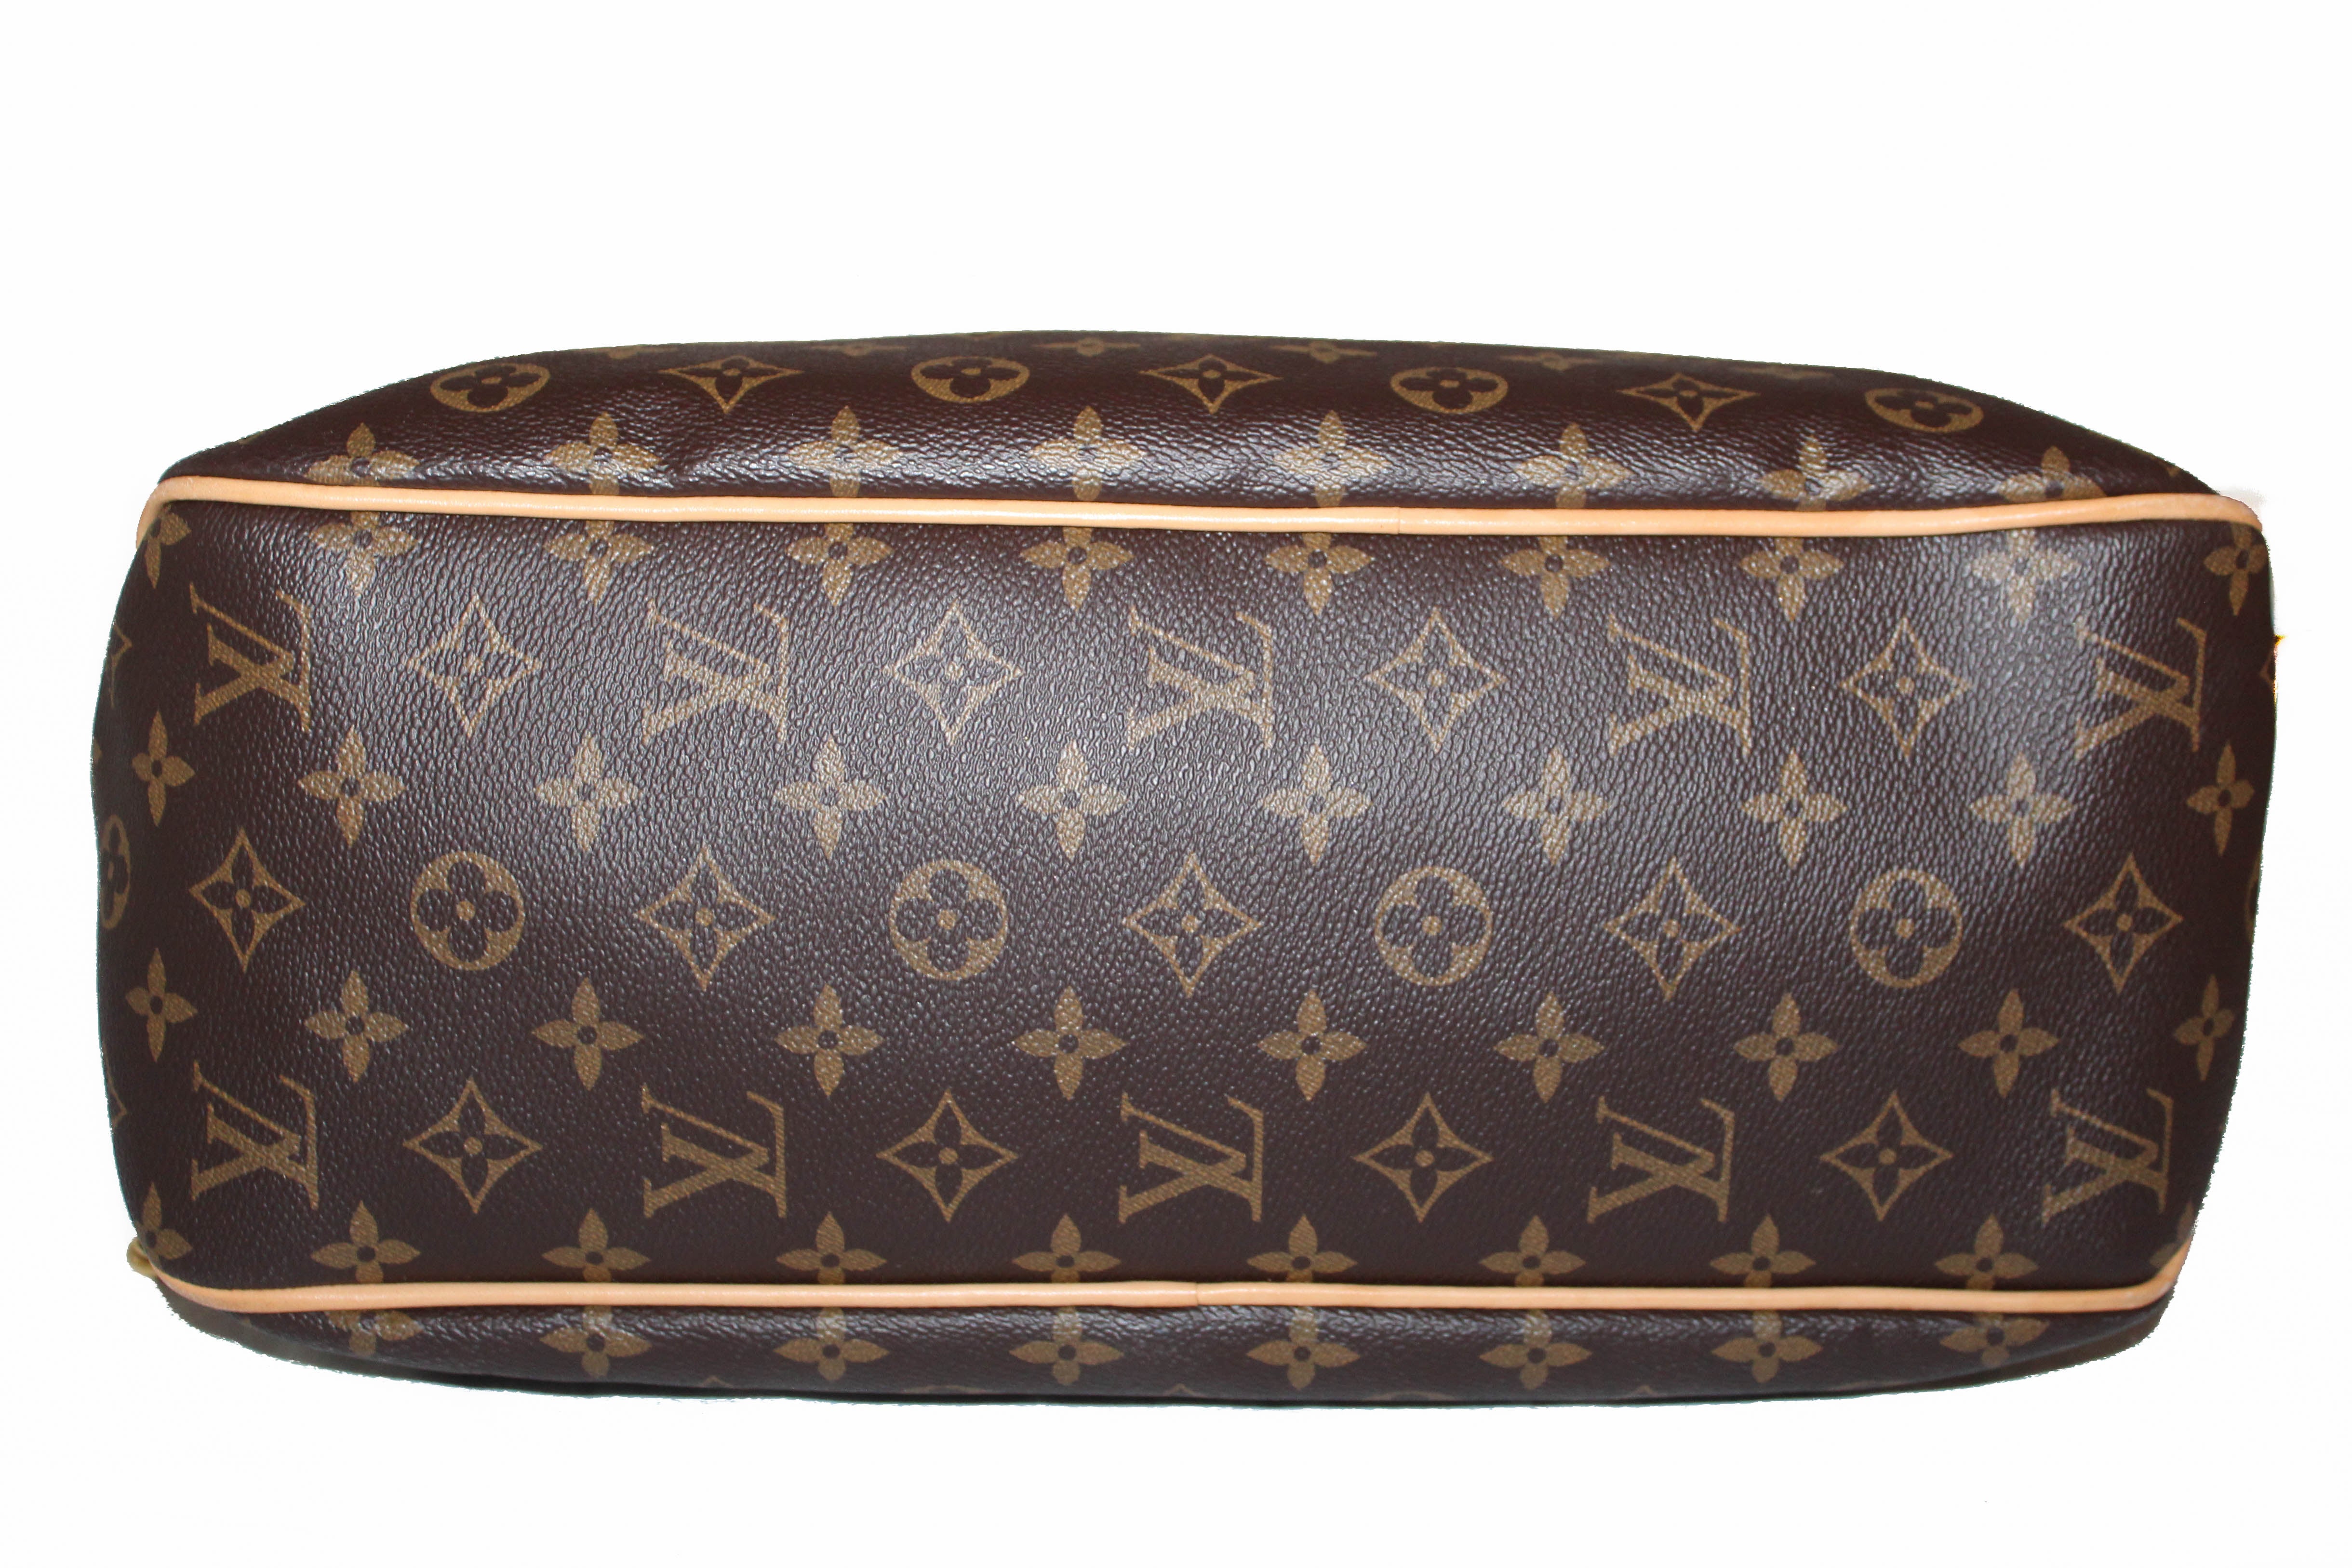 Authentic Louis Vuitton Classic Monogram Delightful MM Hobo Bag